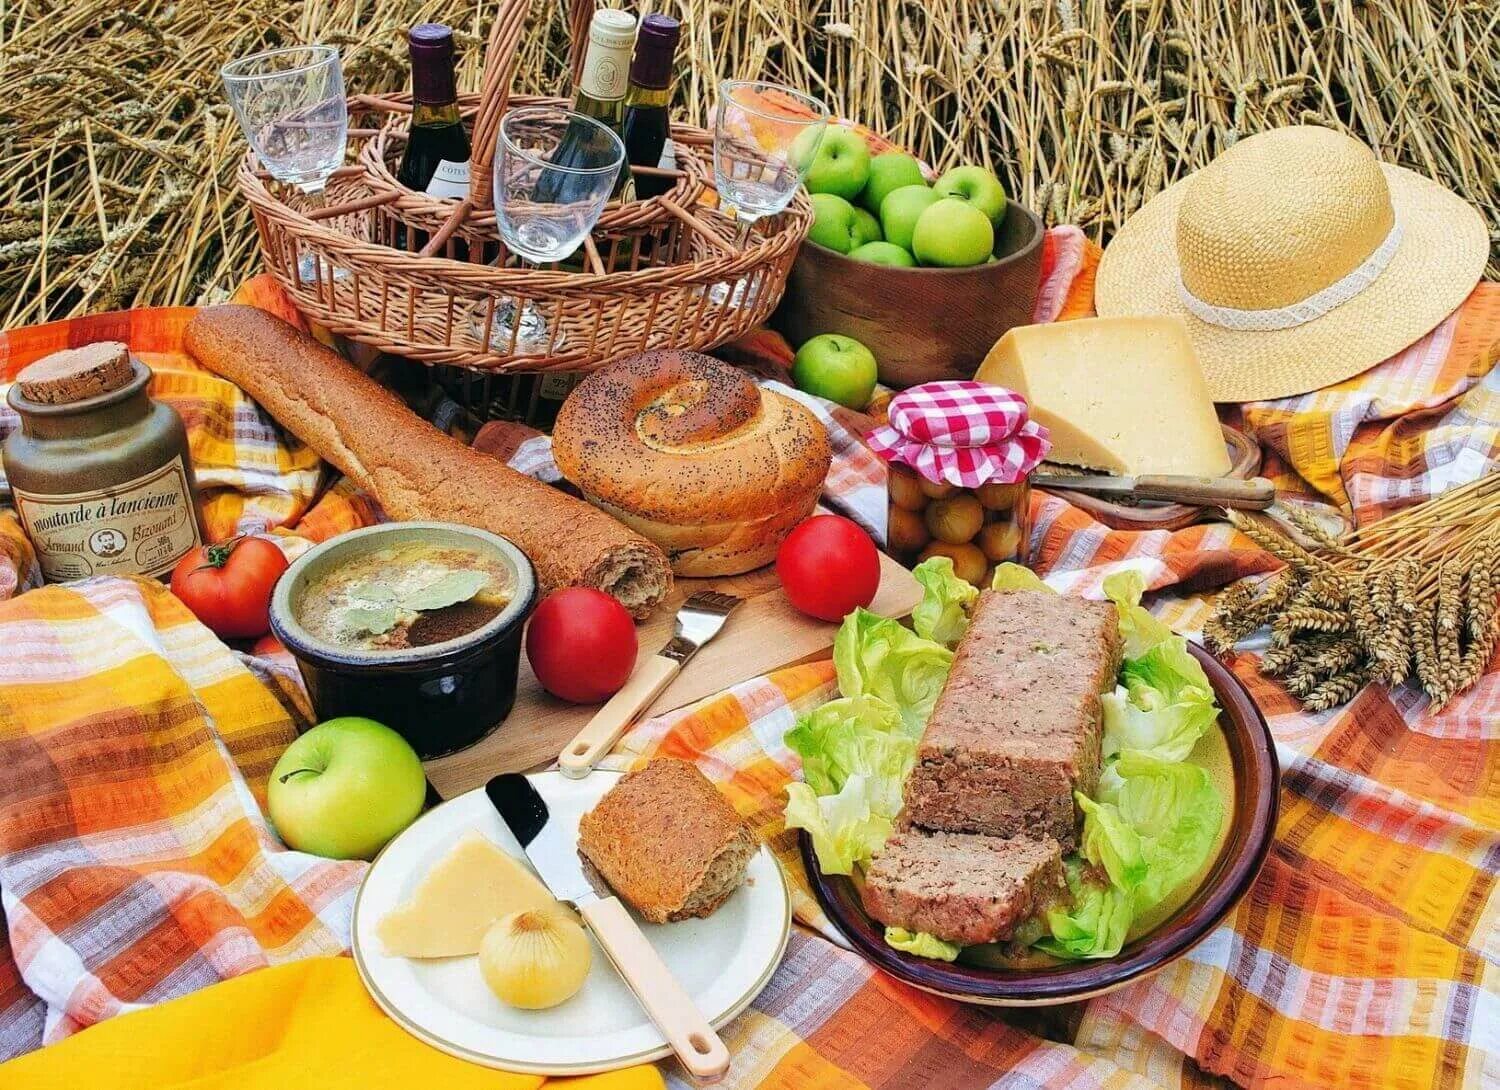 Пикник на природе. Праздничный стол на природе. Еда на пикник. Блюда для пикника на природе. Пикник должно быть